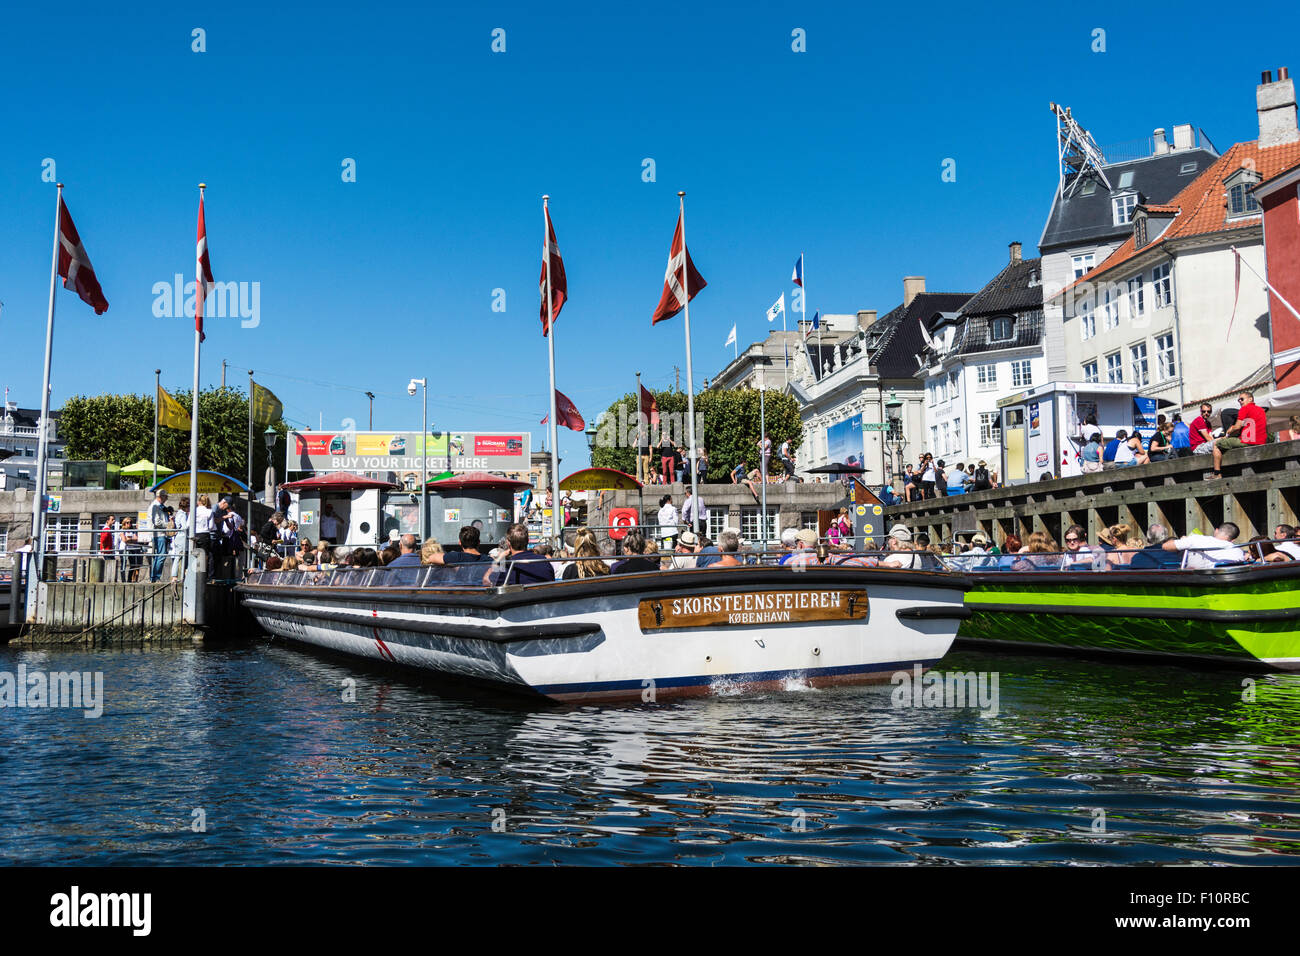 Hotels, restaurants, boats and people on the waterfront district, Nyhavn, Copenhagen, Denmark, Scandinavia, Europe Stock Photo